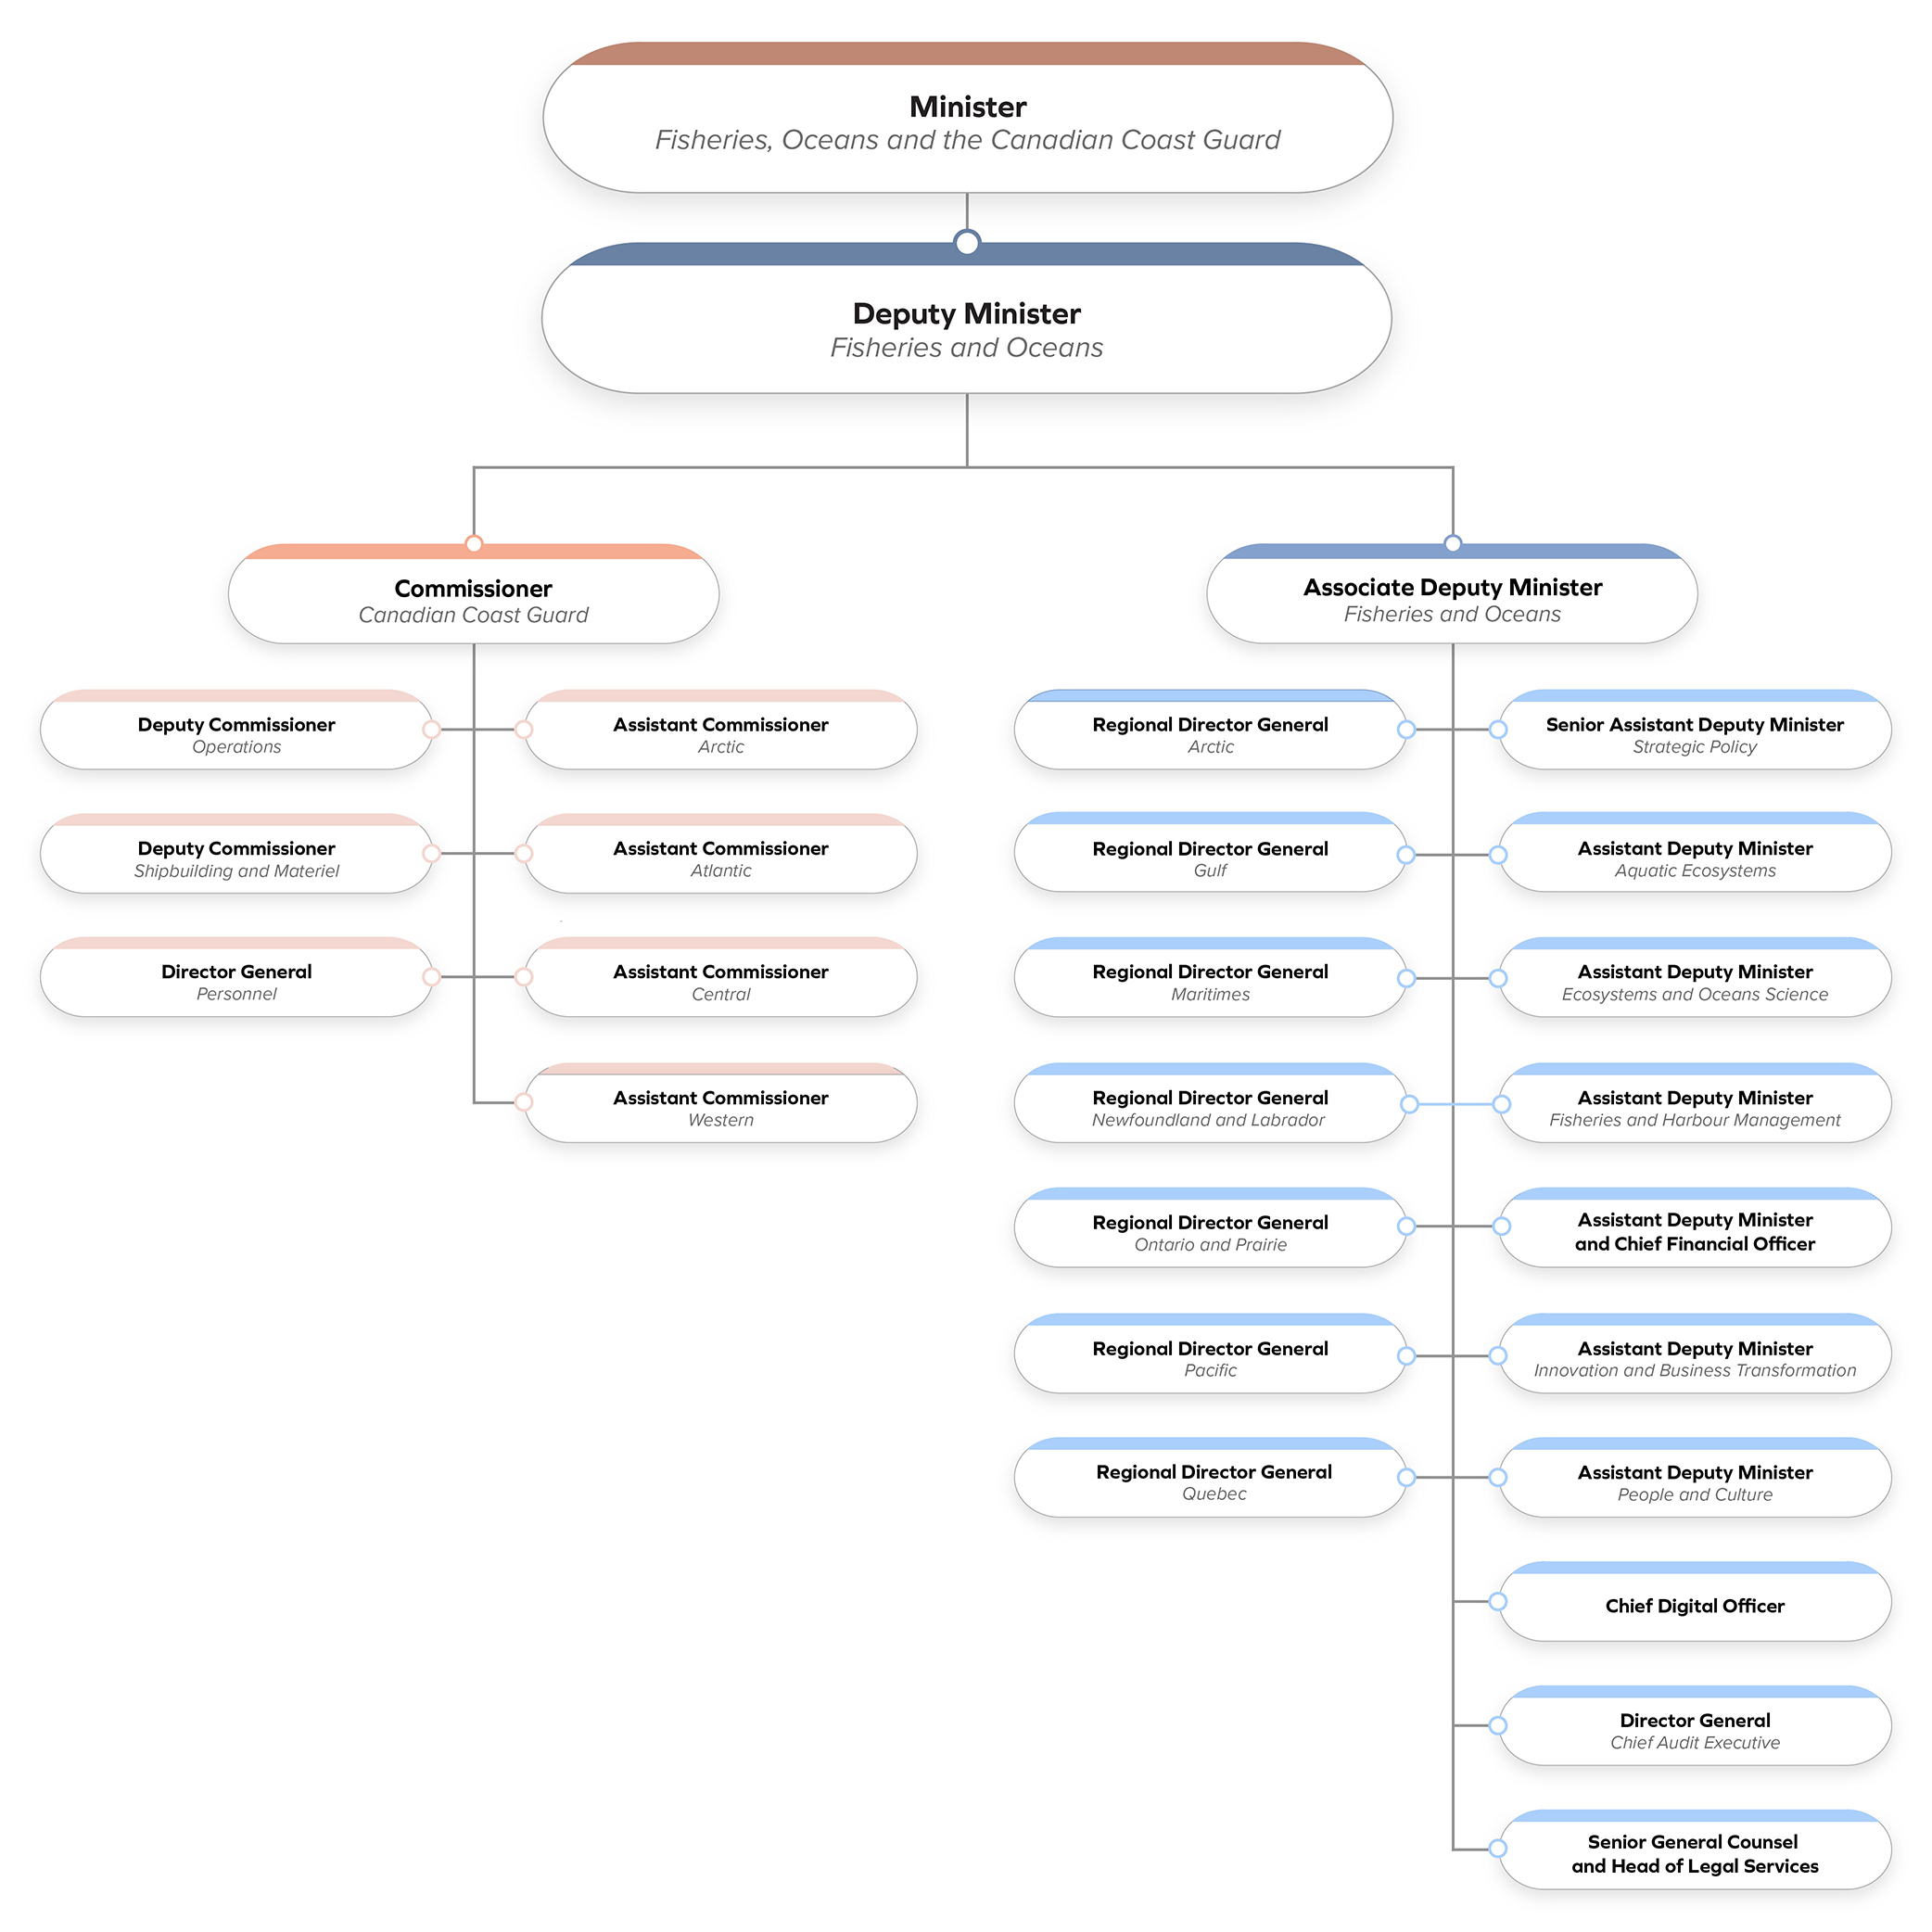 DFO's Organizational Structure